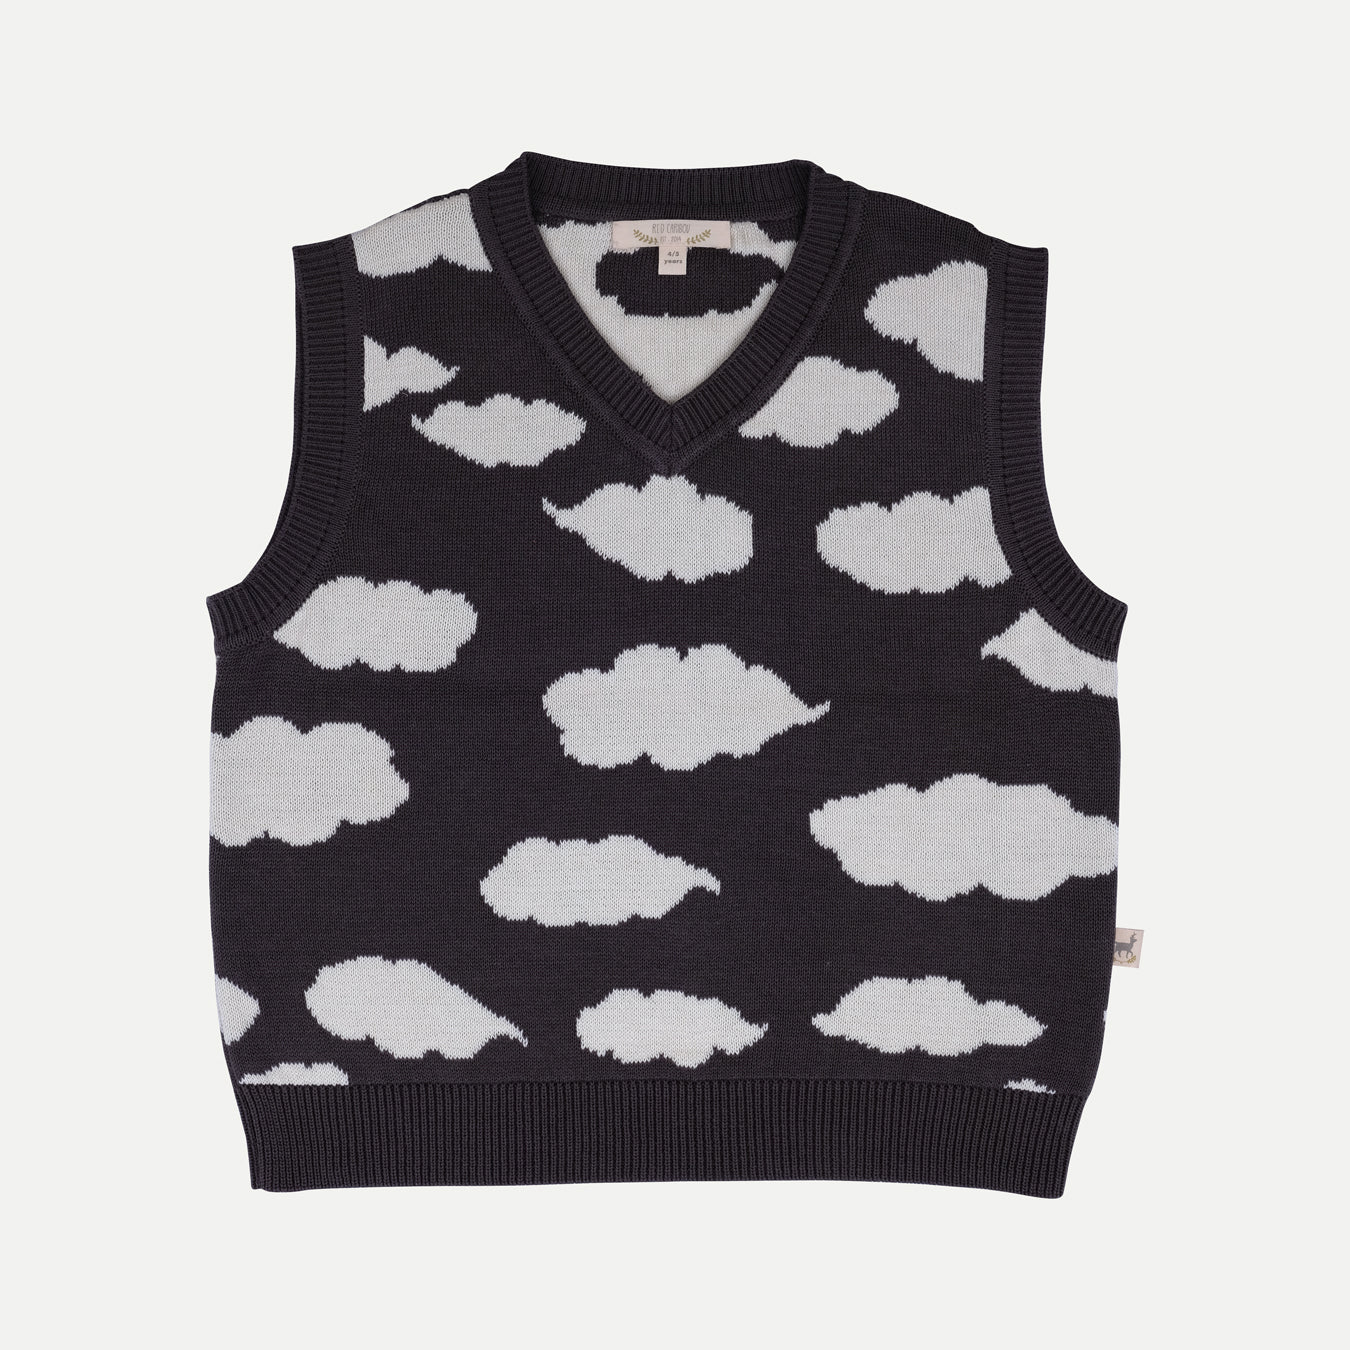 'clouds' beluga knit vest